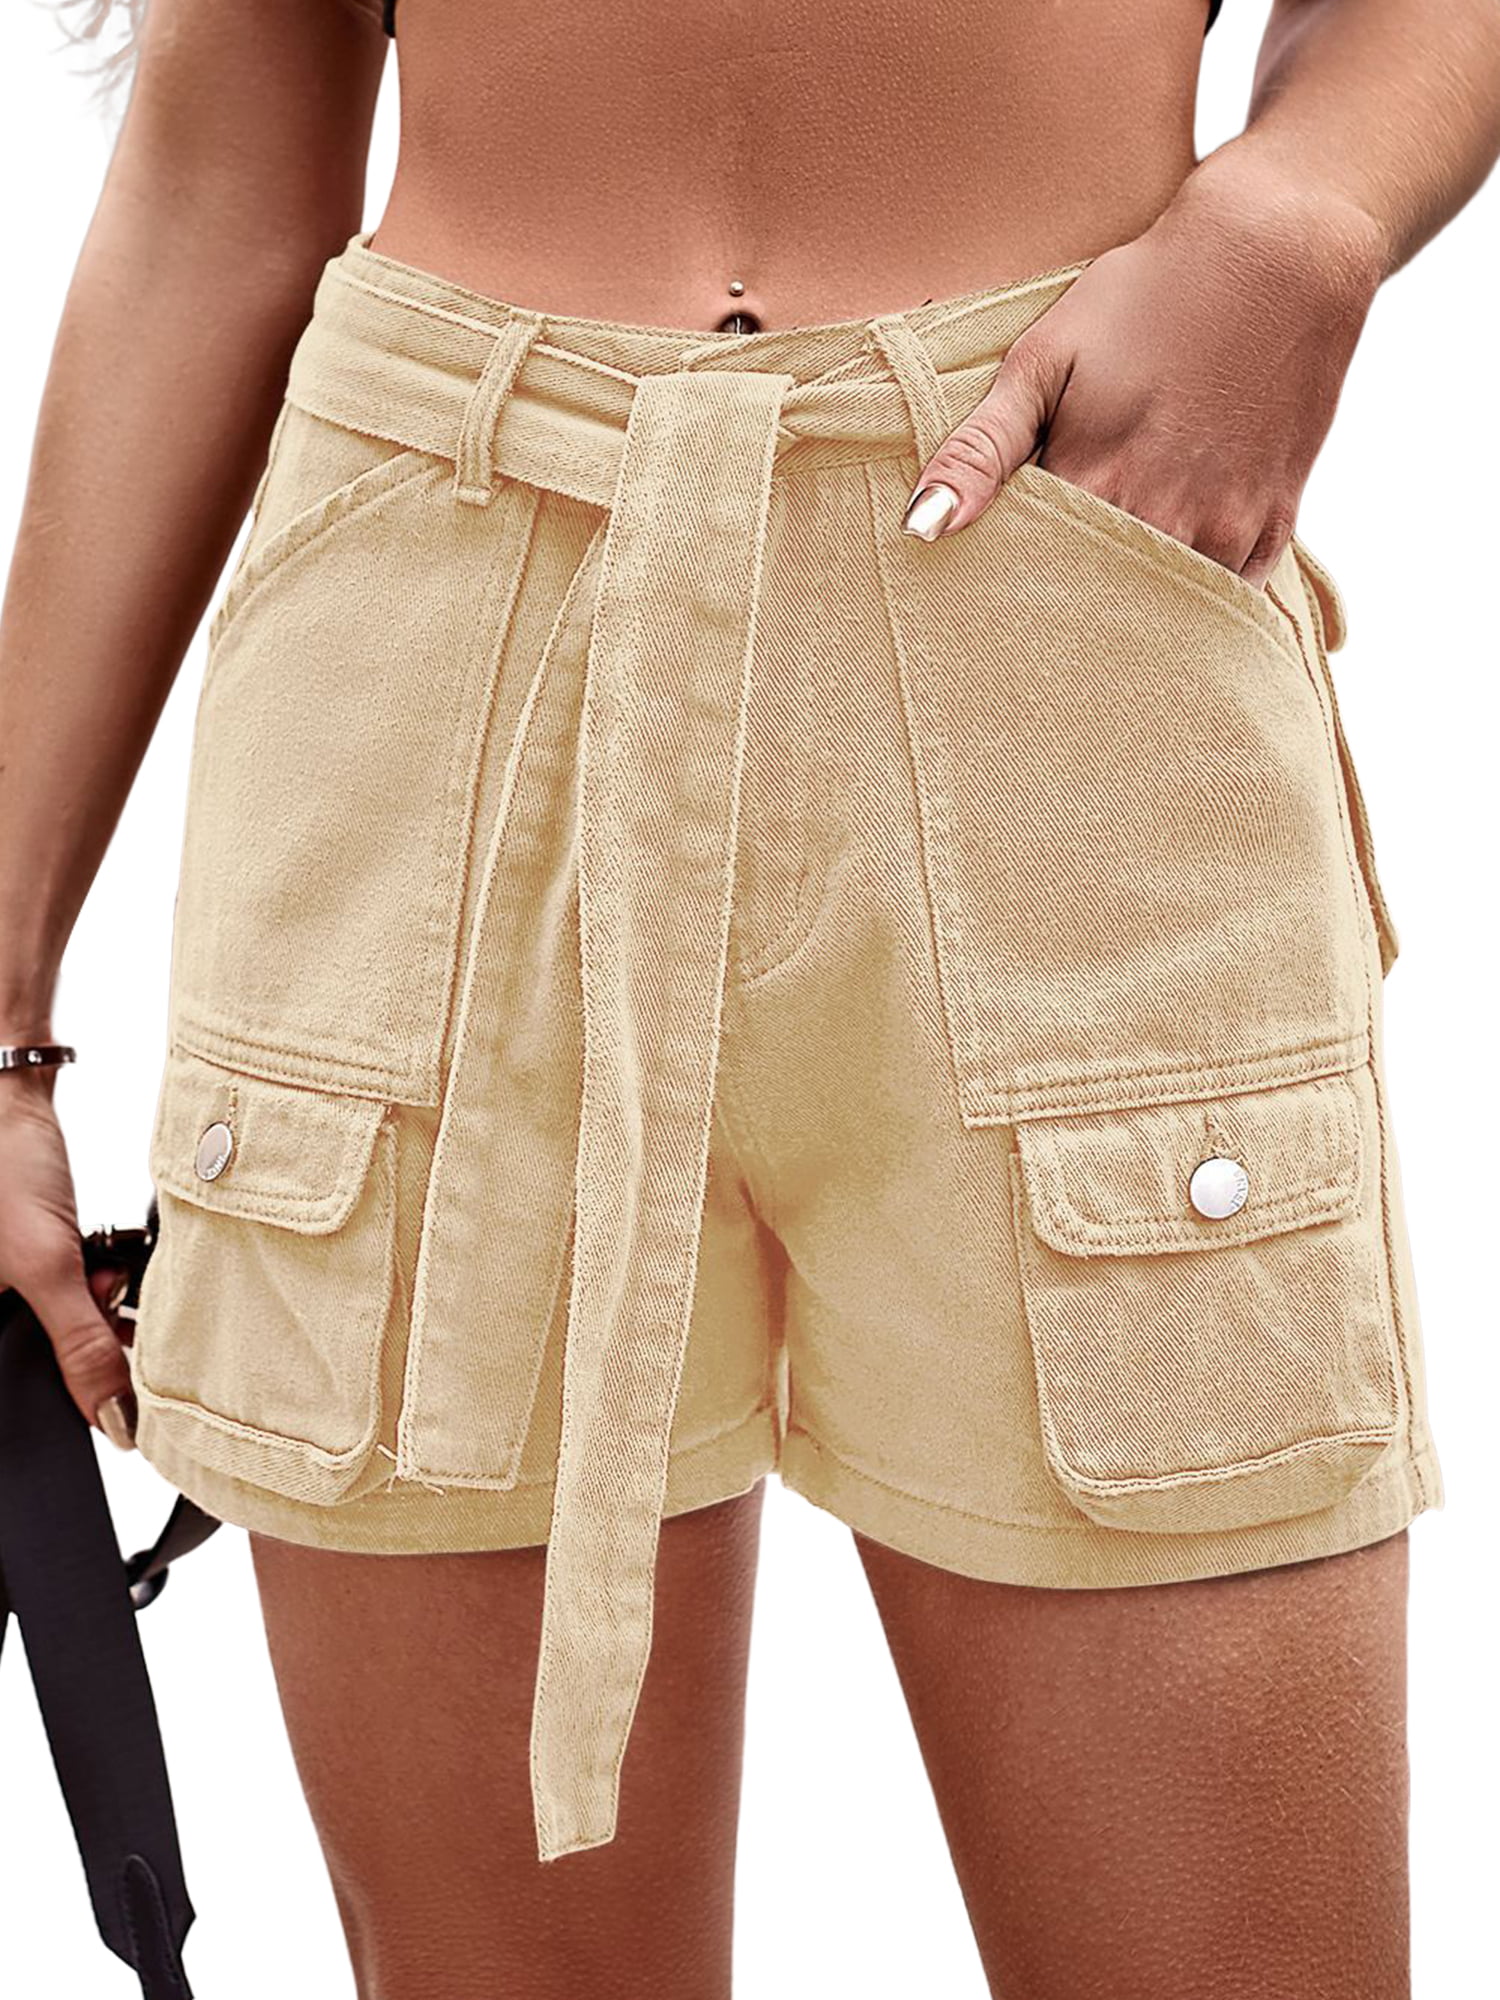 Women's Bottoms, Pants, Cargos, Shorts & Skirts